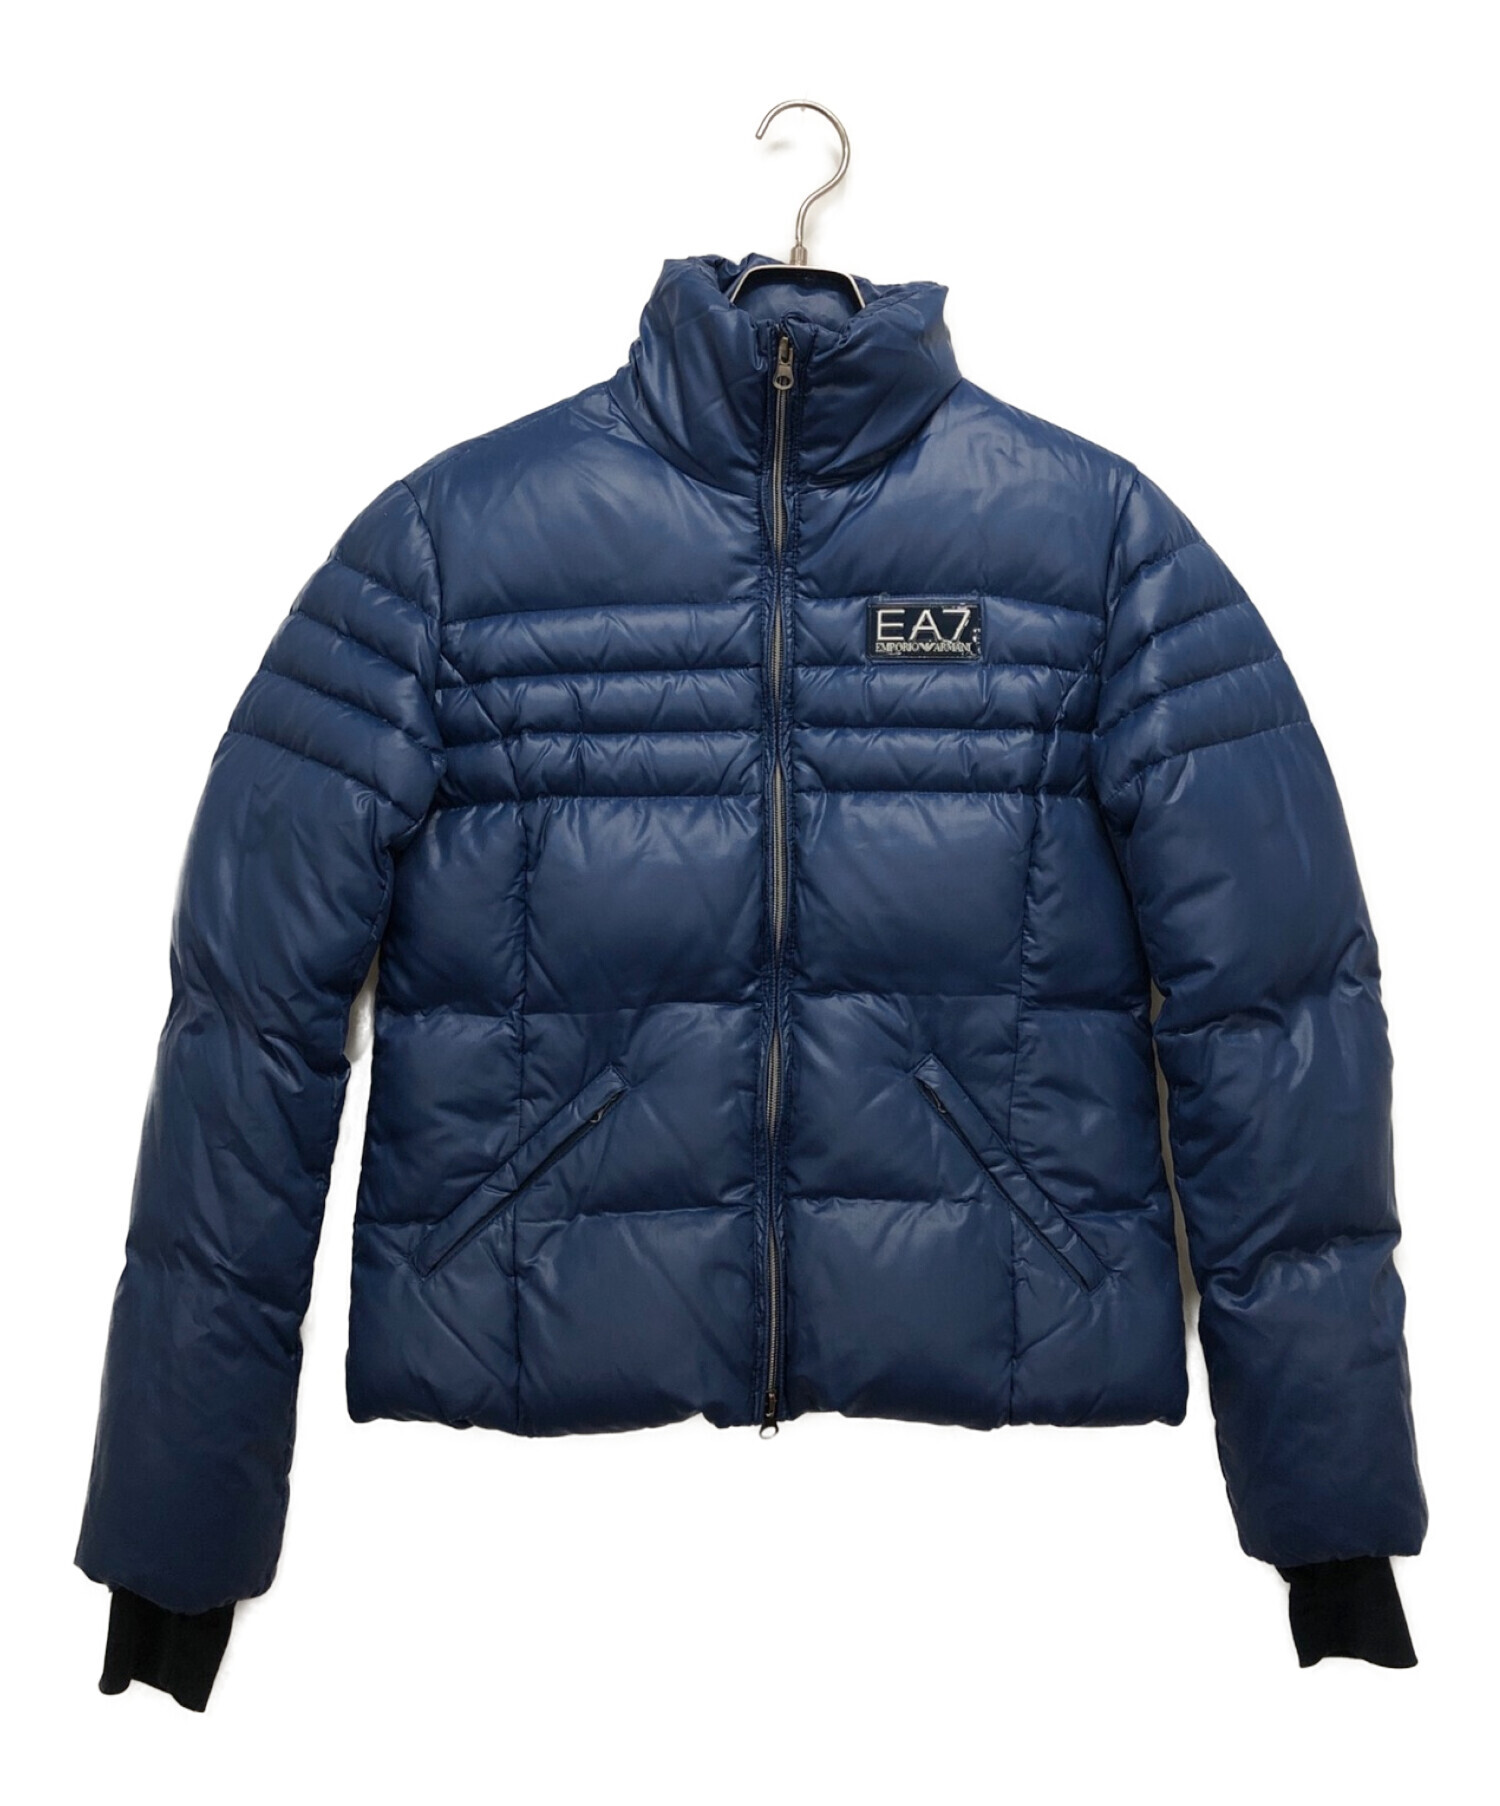 EA7 EMPORIO ARMANI (EA7 エンポリオアルマーニ) ダウンジャケット ブルー サイズ:S